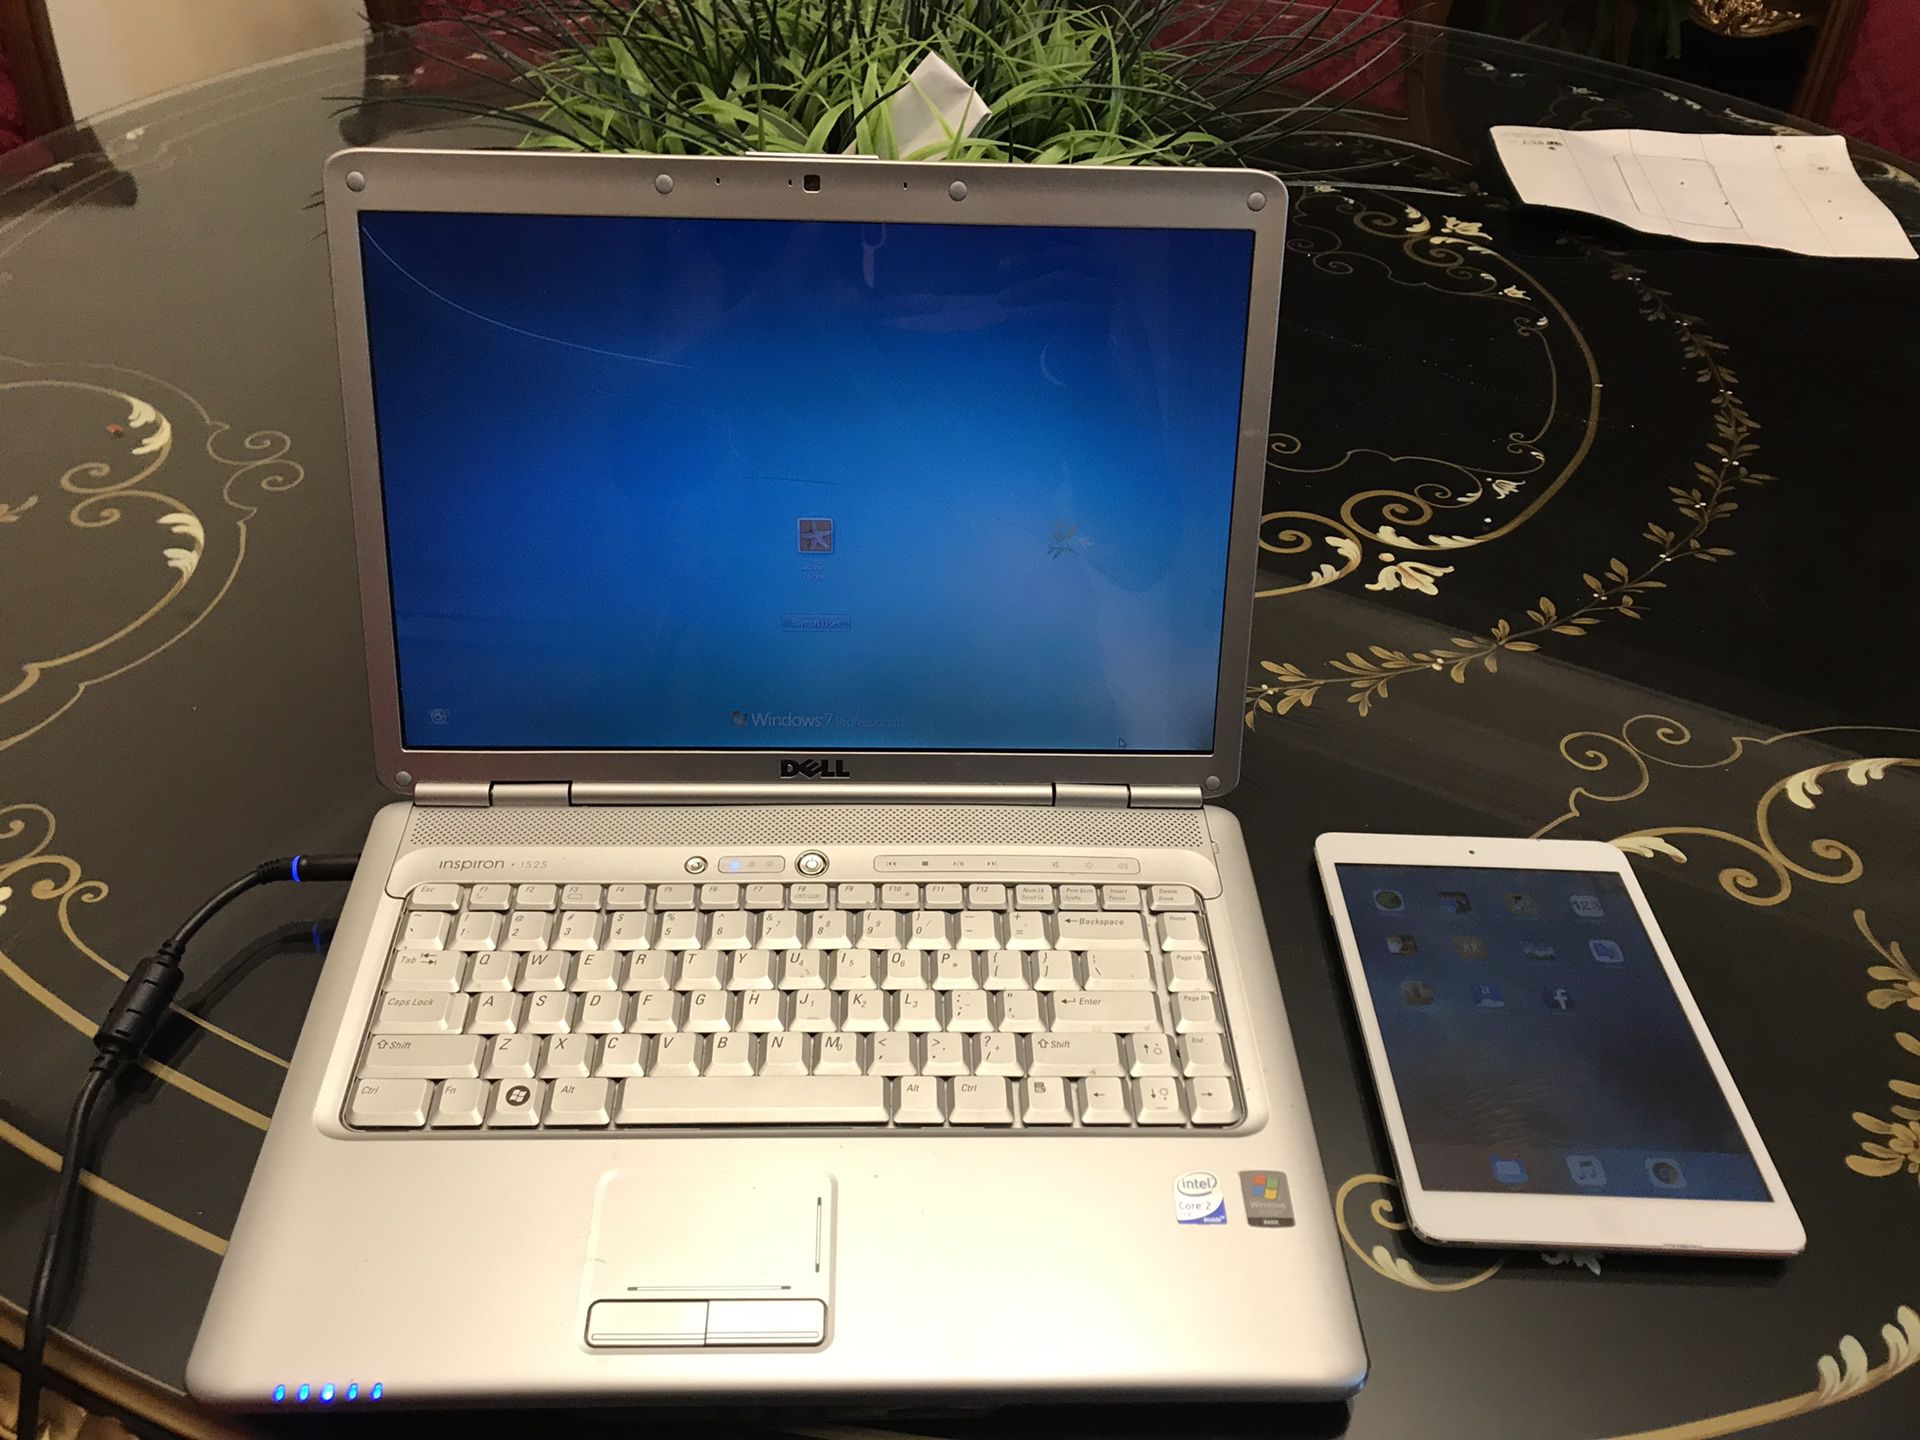 Bundle Dell laptop and iPad mini